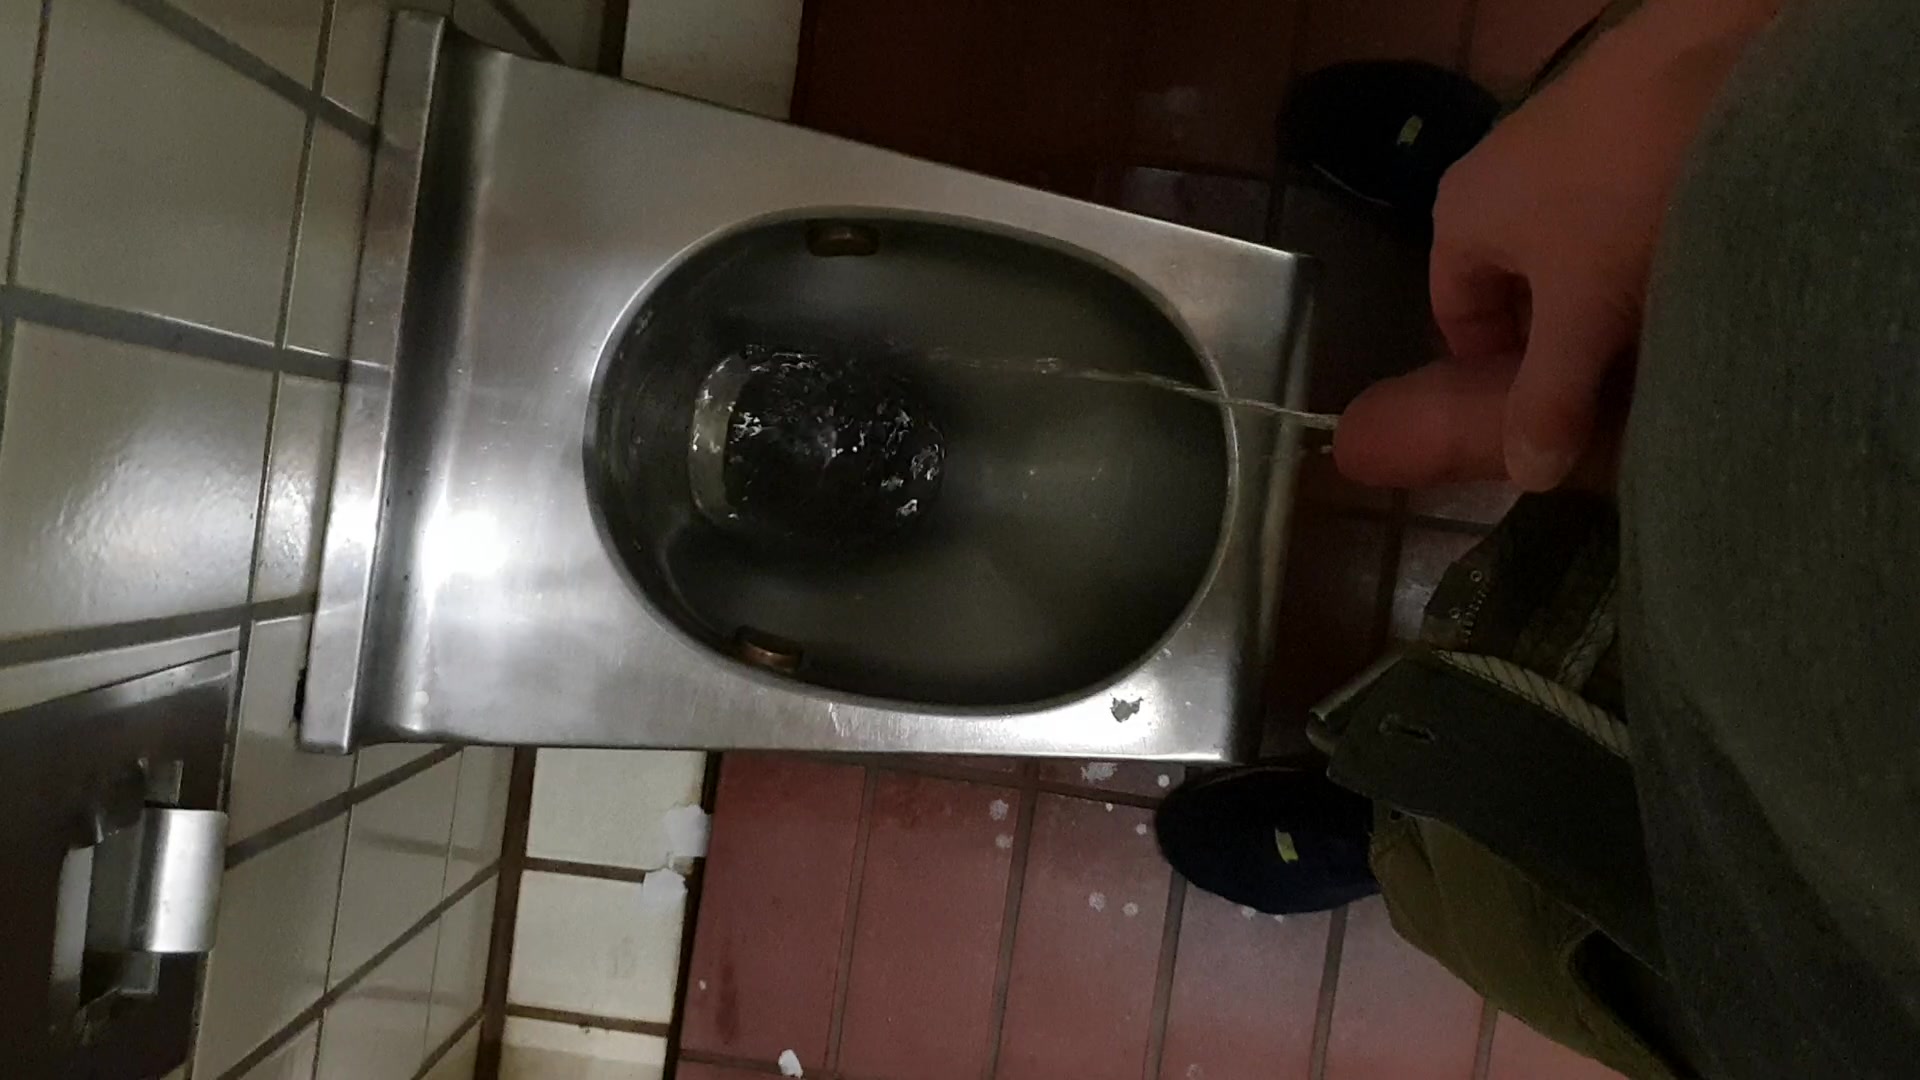 Pissing in a public toilet - video 2